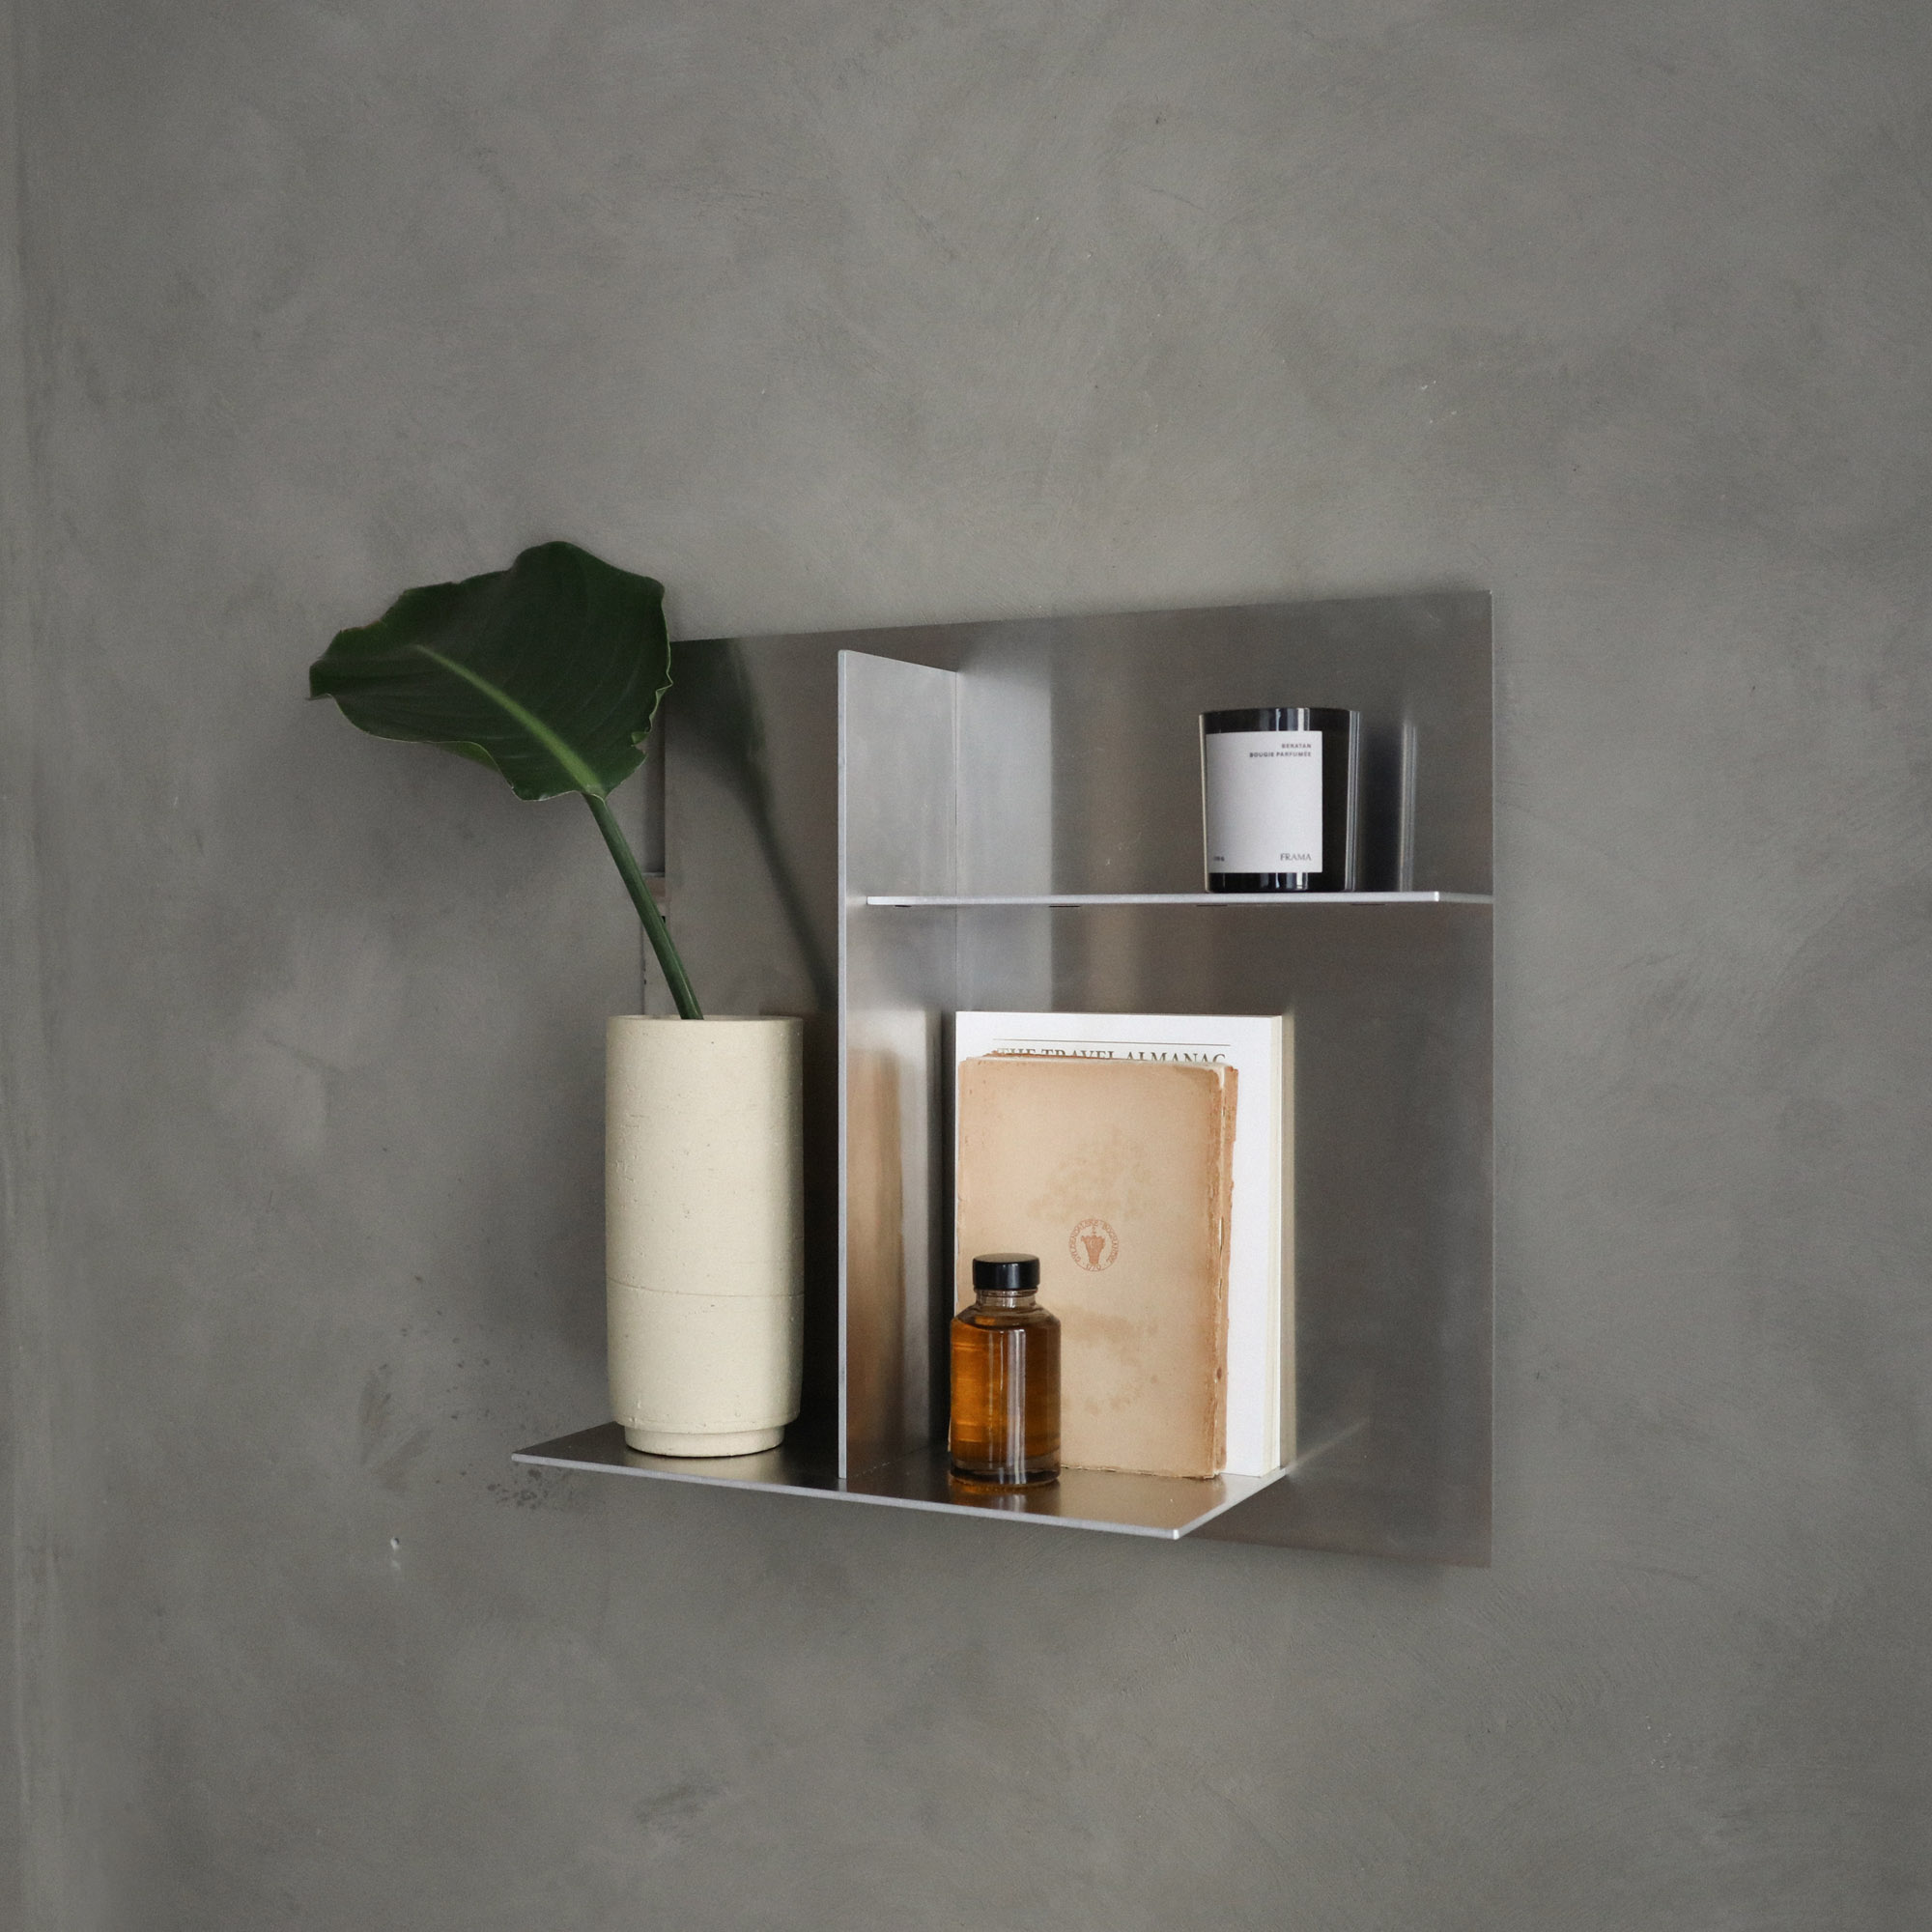 Wall shelf Typecase Rivet by Frama made of untreated aluminum